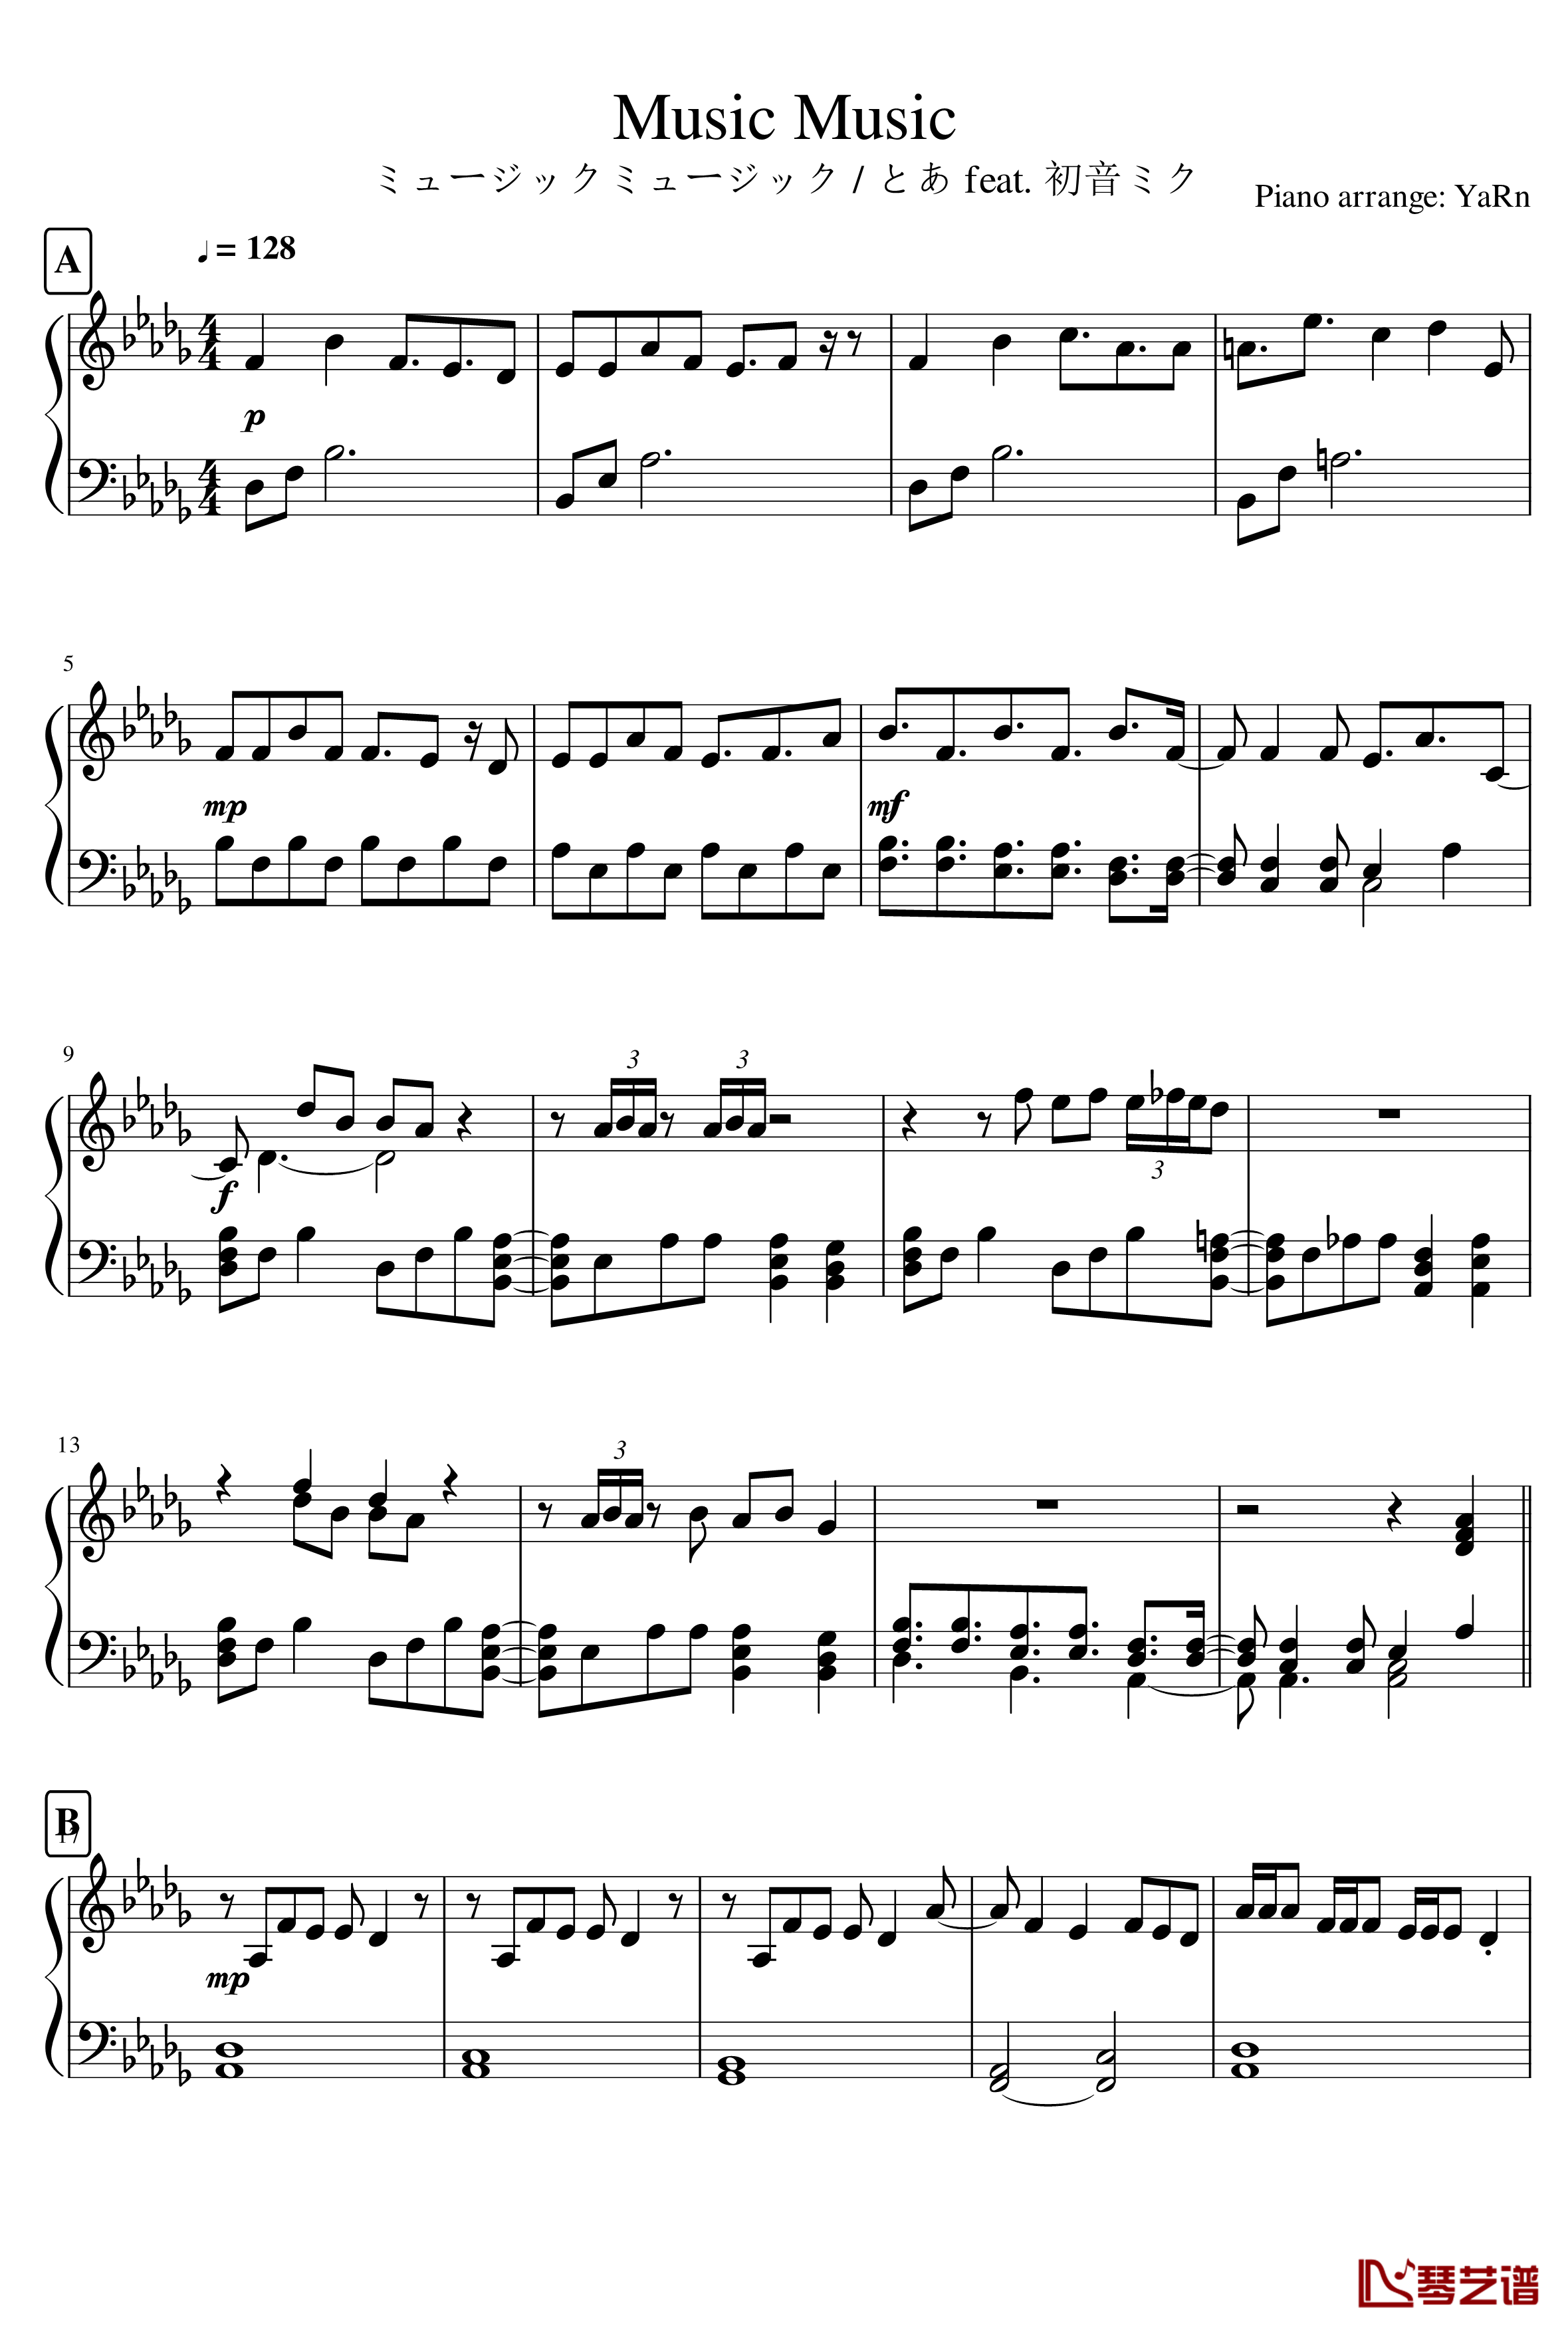 Music Music钢琴谱-初音未来1